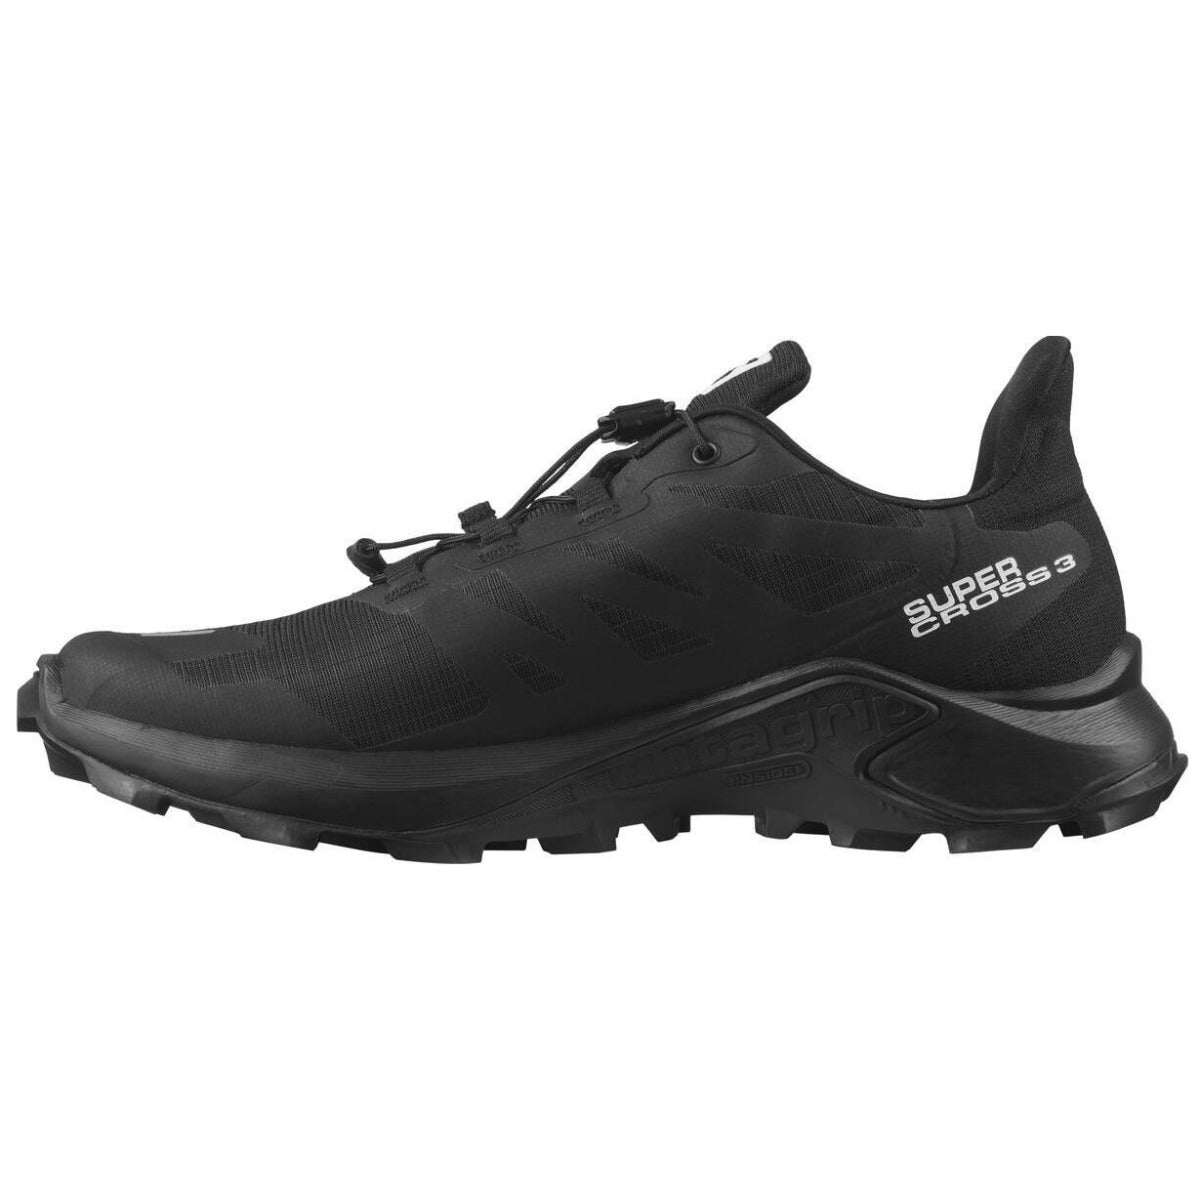 Salomon Supercross 3 Trail Shoes Women's (Black)